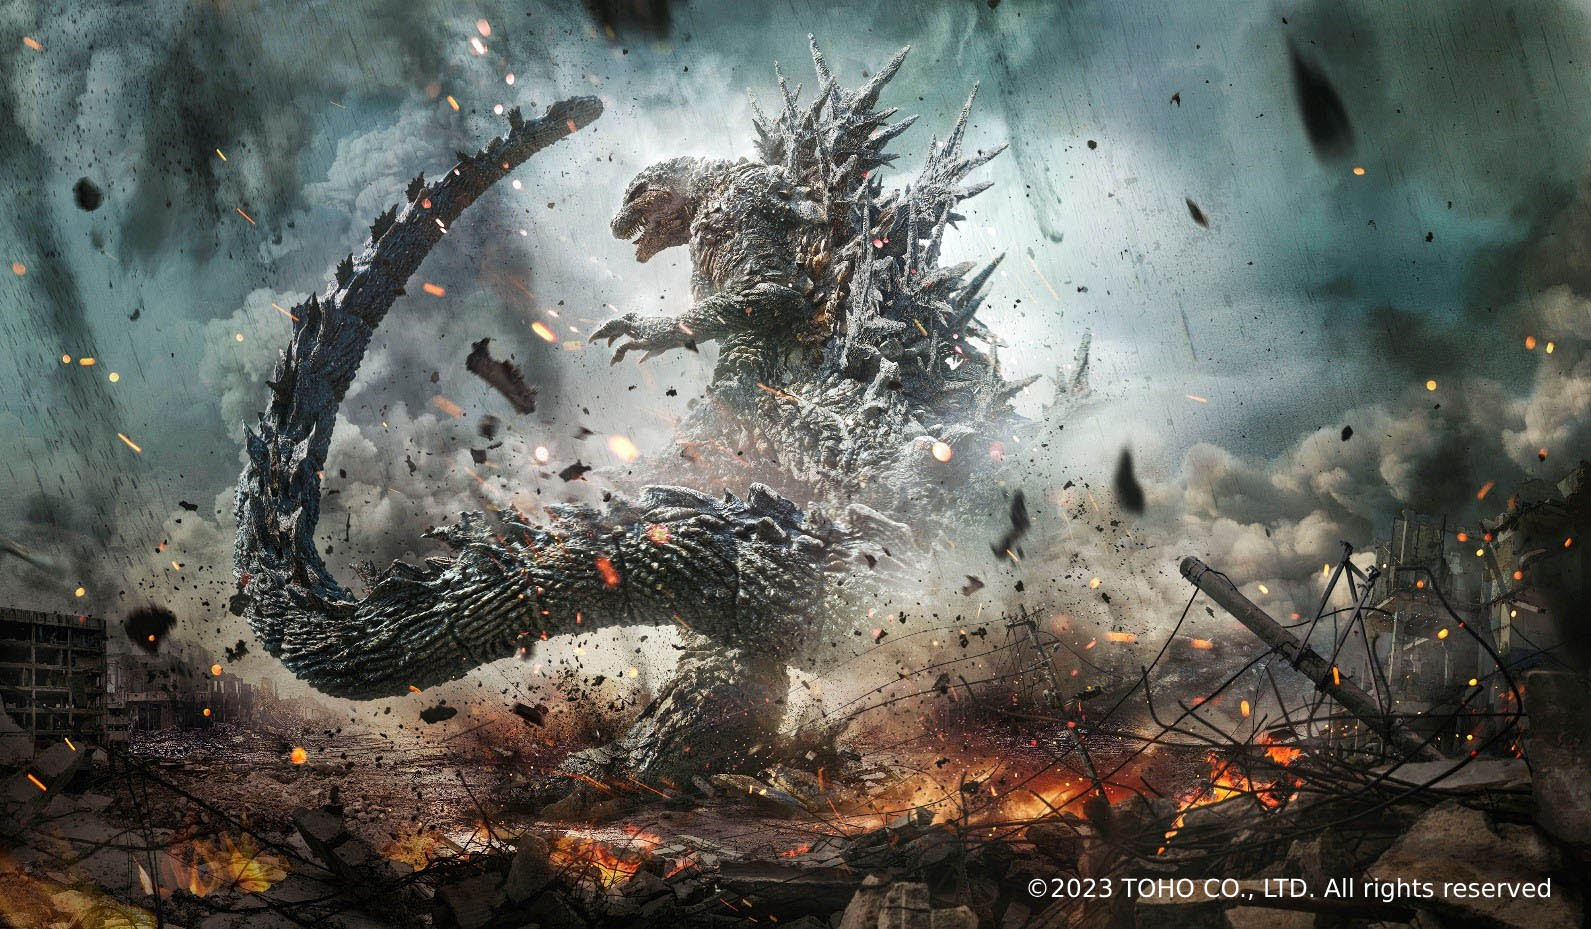 Godzilla Minus One [credit: TOHO CO., LTD. All rights reserved; courtesy of Nexo Digital]